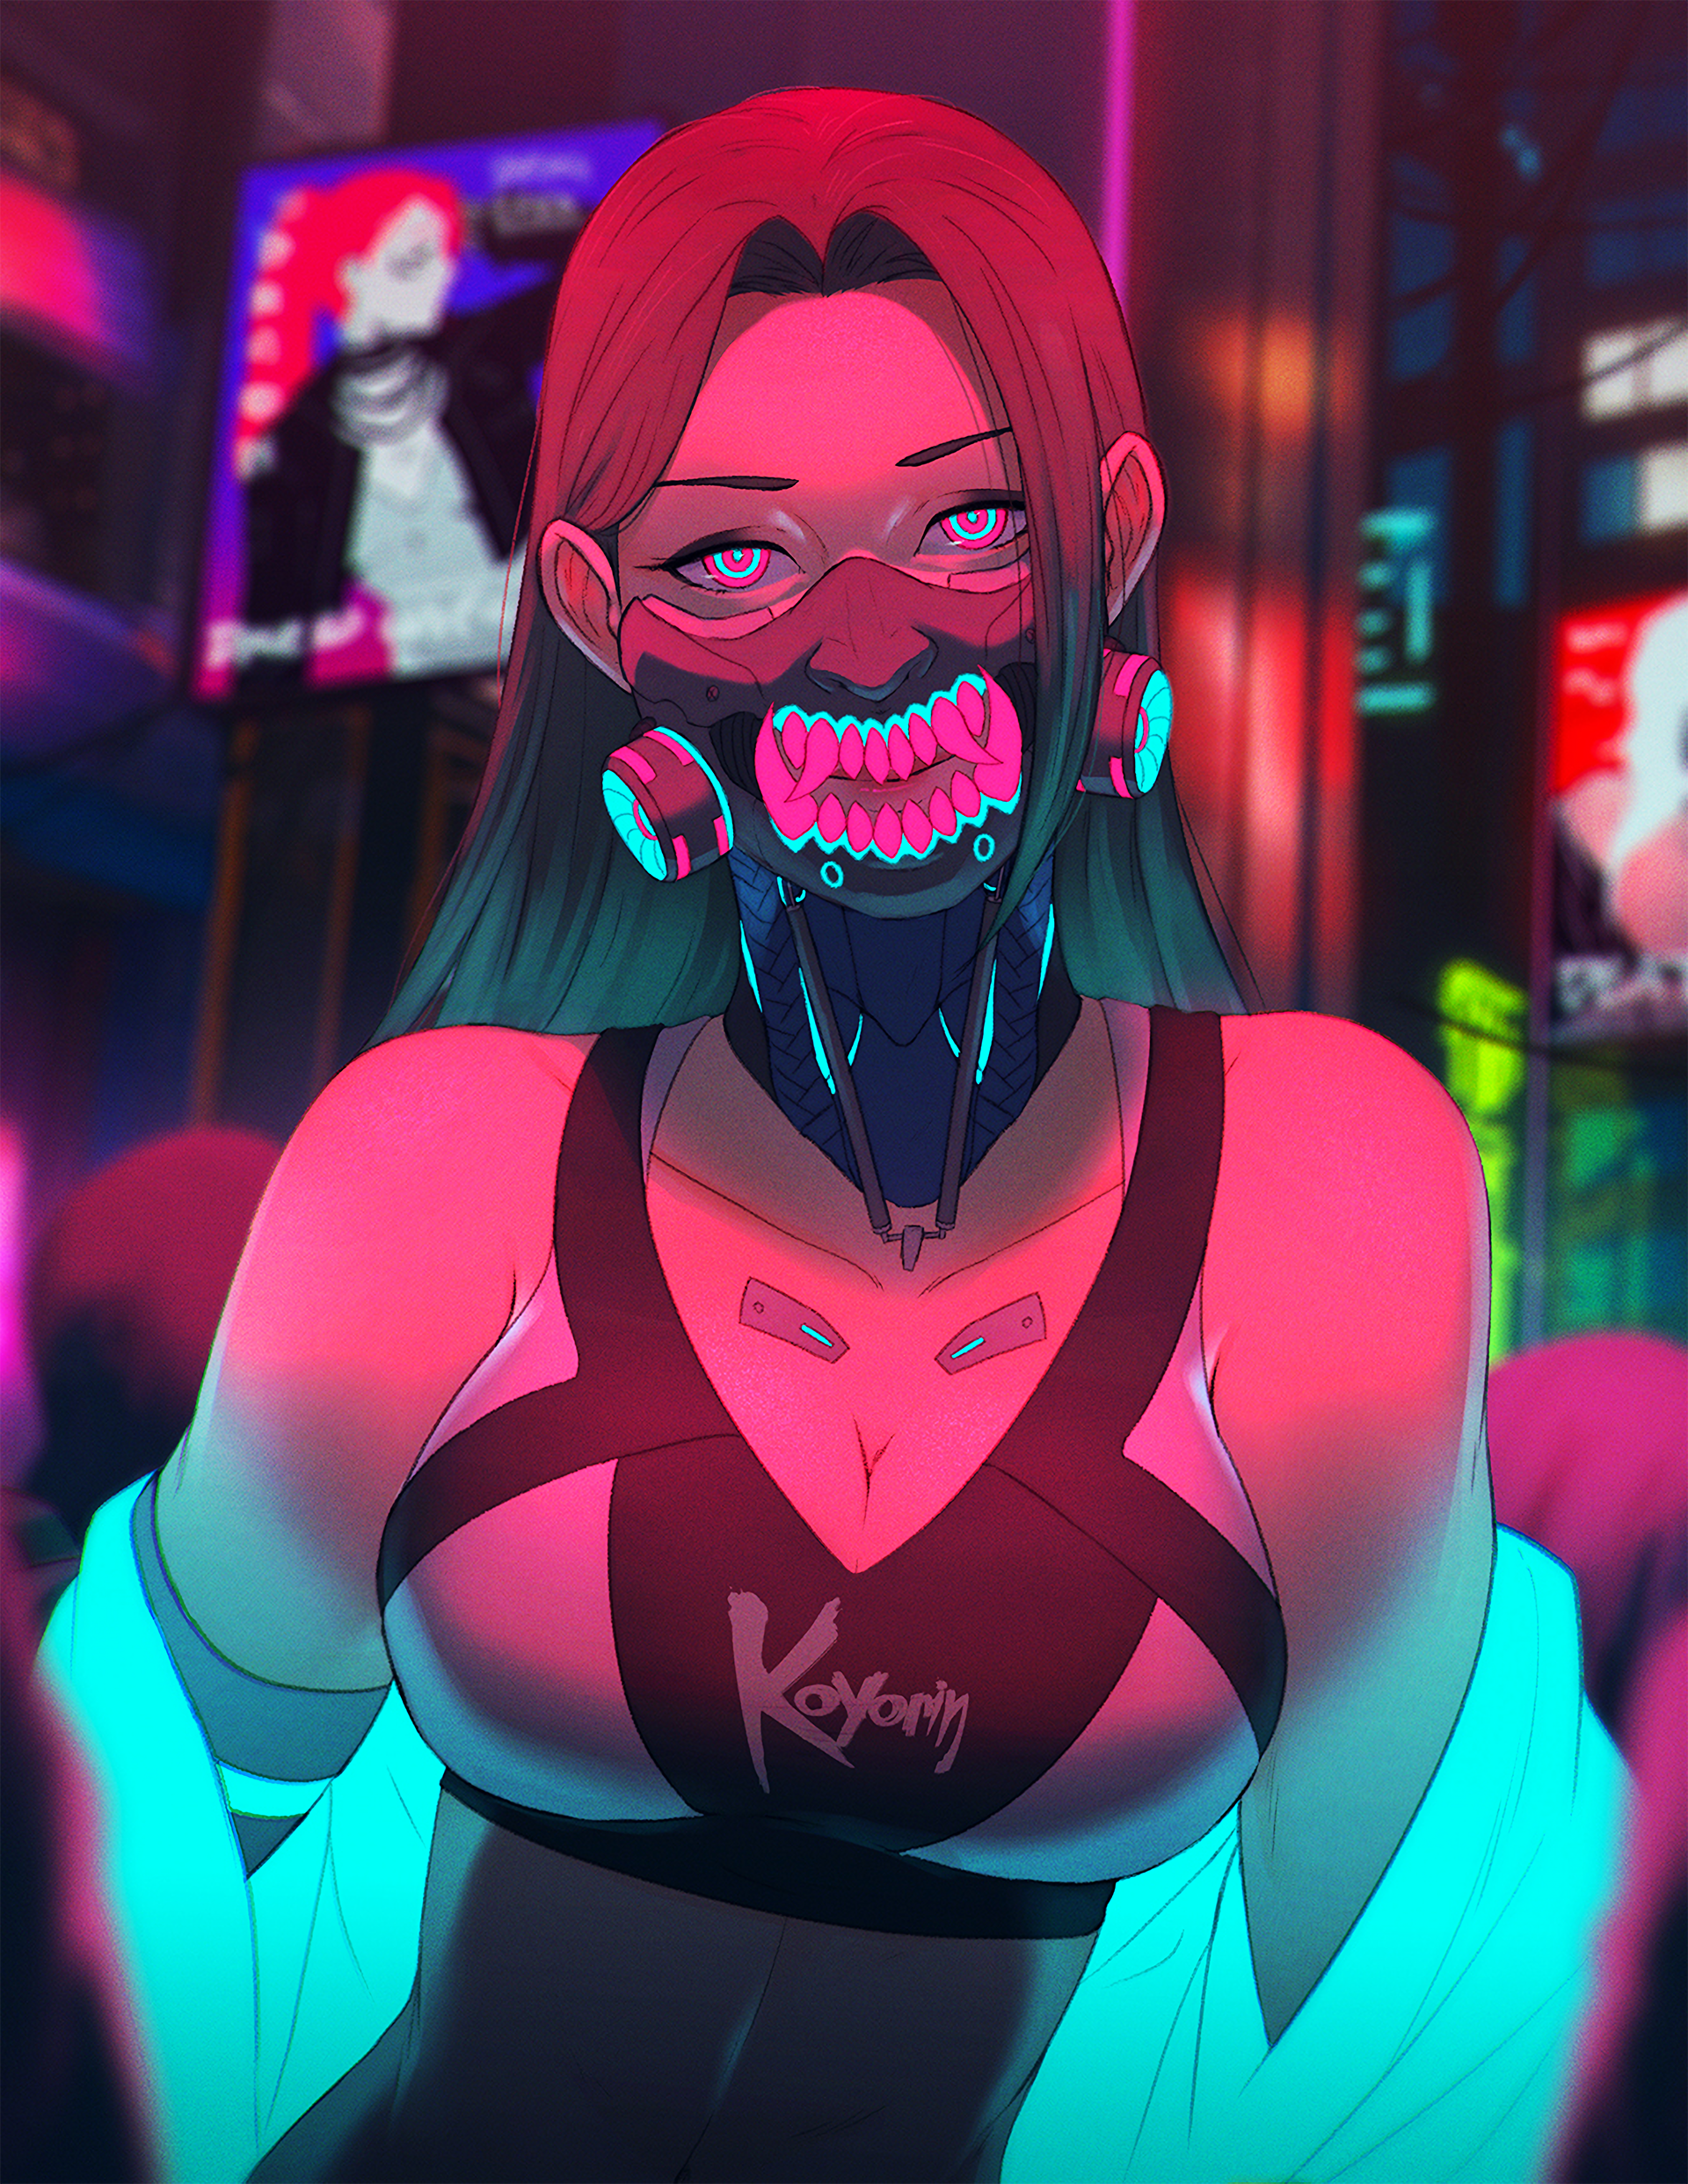 Koyorin Cyberpunk Cyberpunk Samurai Neon Colorful Futuristic Anime Girls Gas Masks Mask Vertical 1920x2484